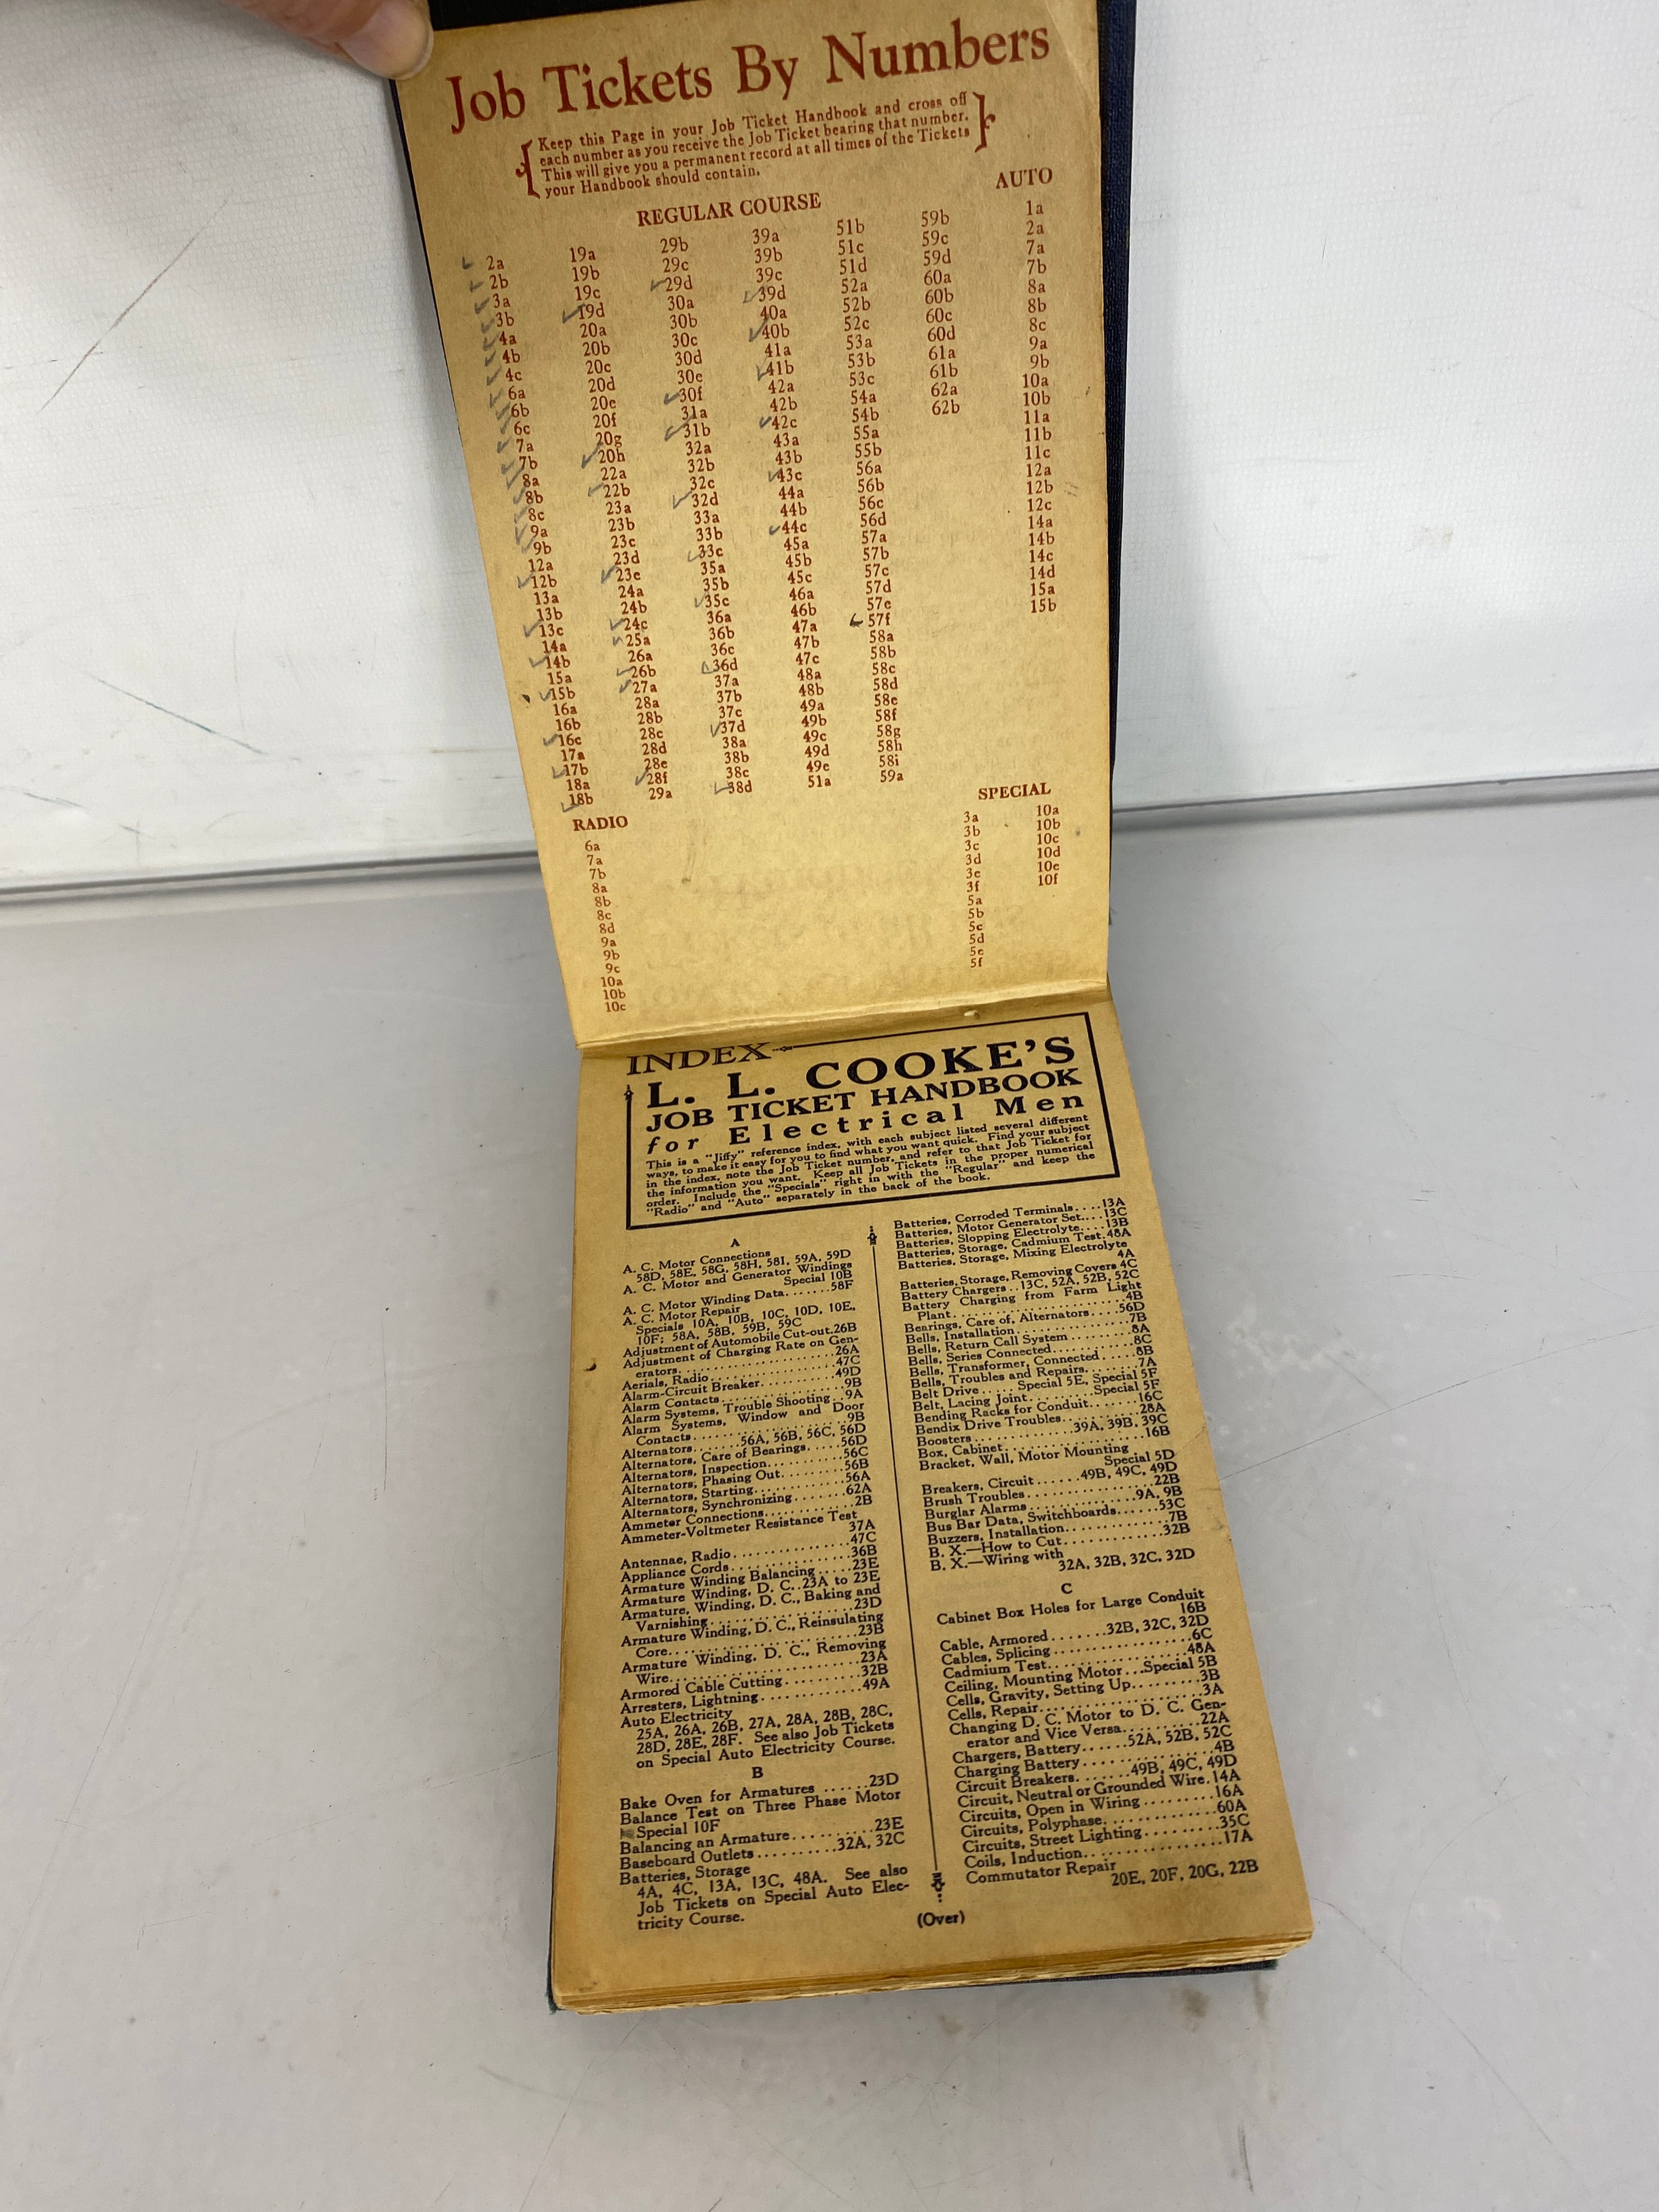 L.L. Cooke's Job Ticket Handbook for Electrical Men 1927 HC